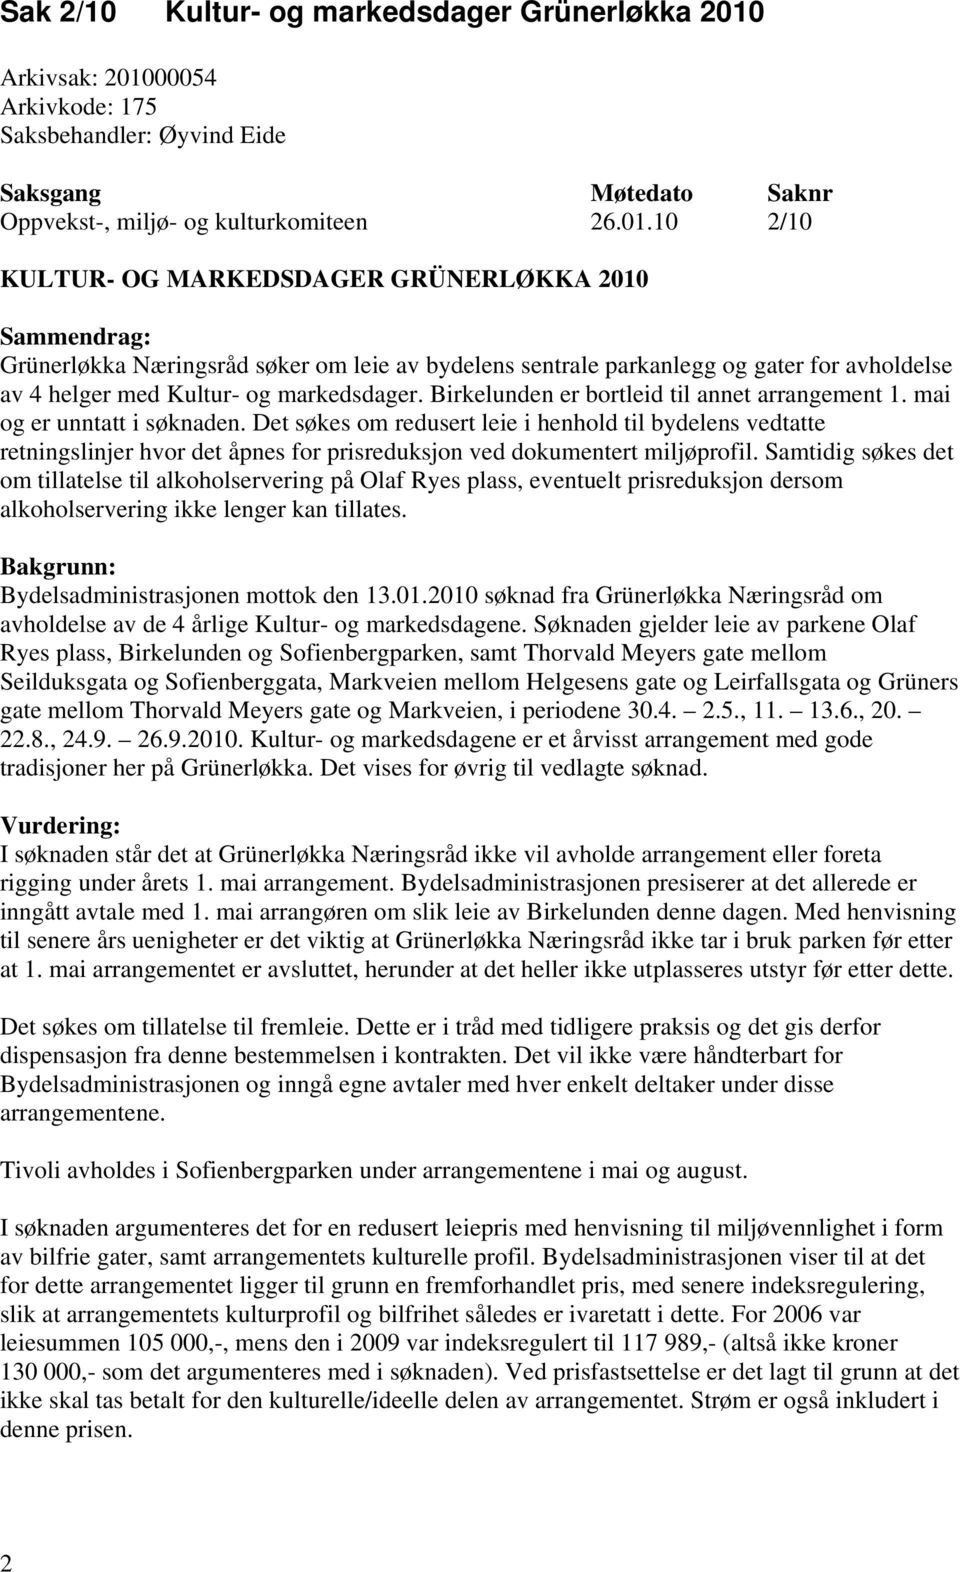 00054 Arkivkode: 175 Saksbehandler: Øyvind Eide Saksgang Møtedato Saknr Oppvekst-, miljø- og kulturkomiteen 26.01.